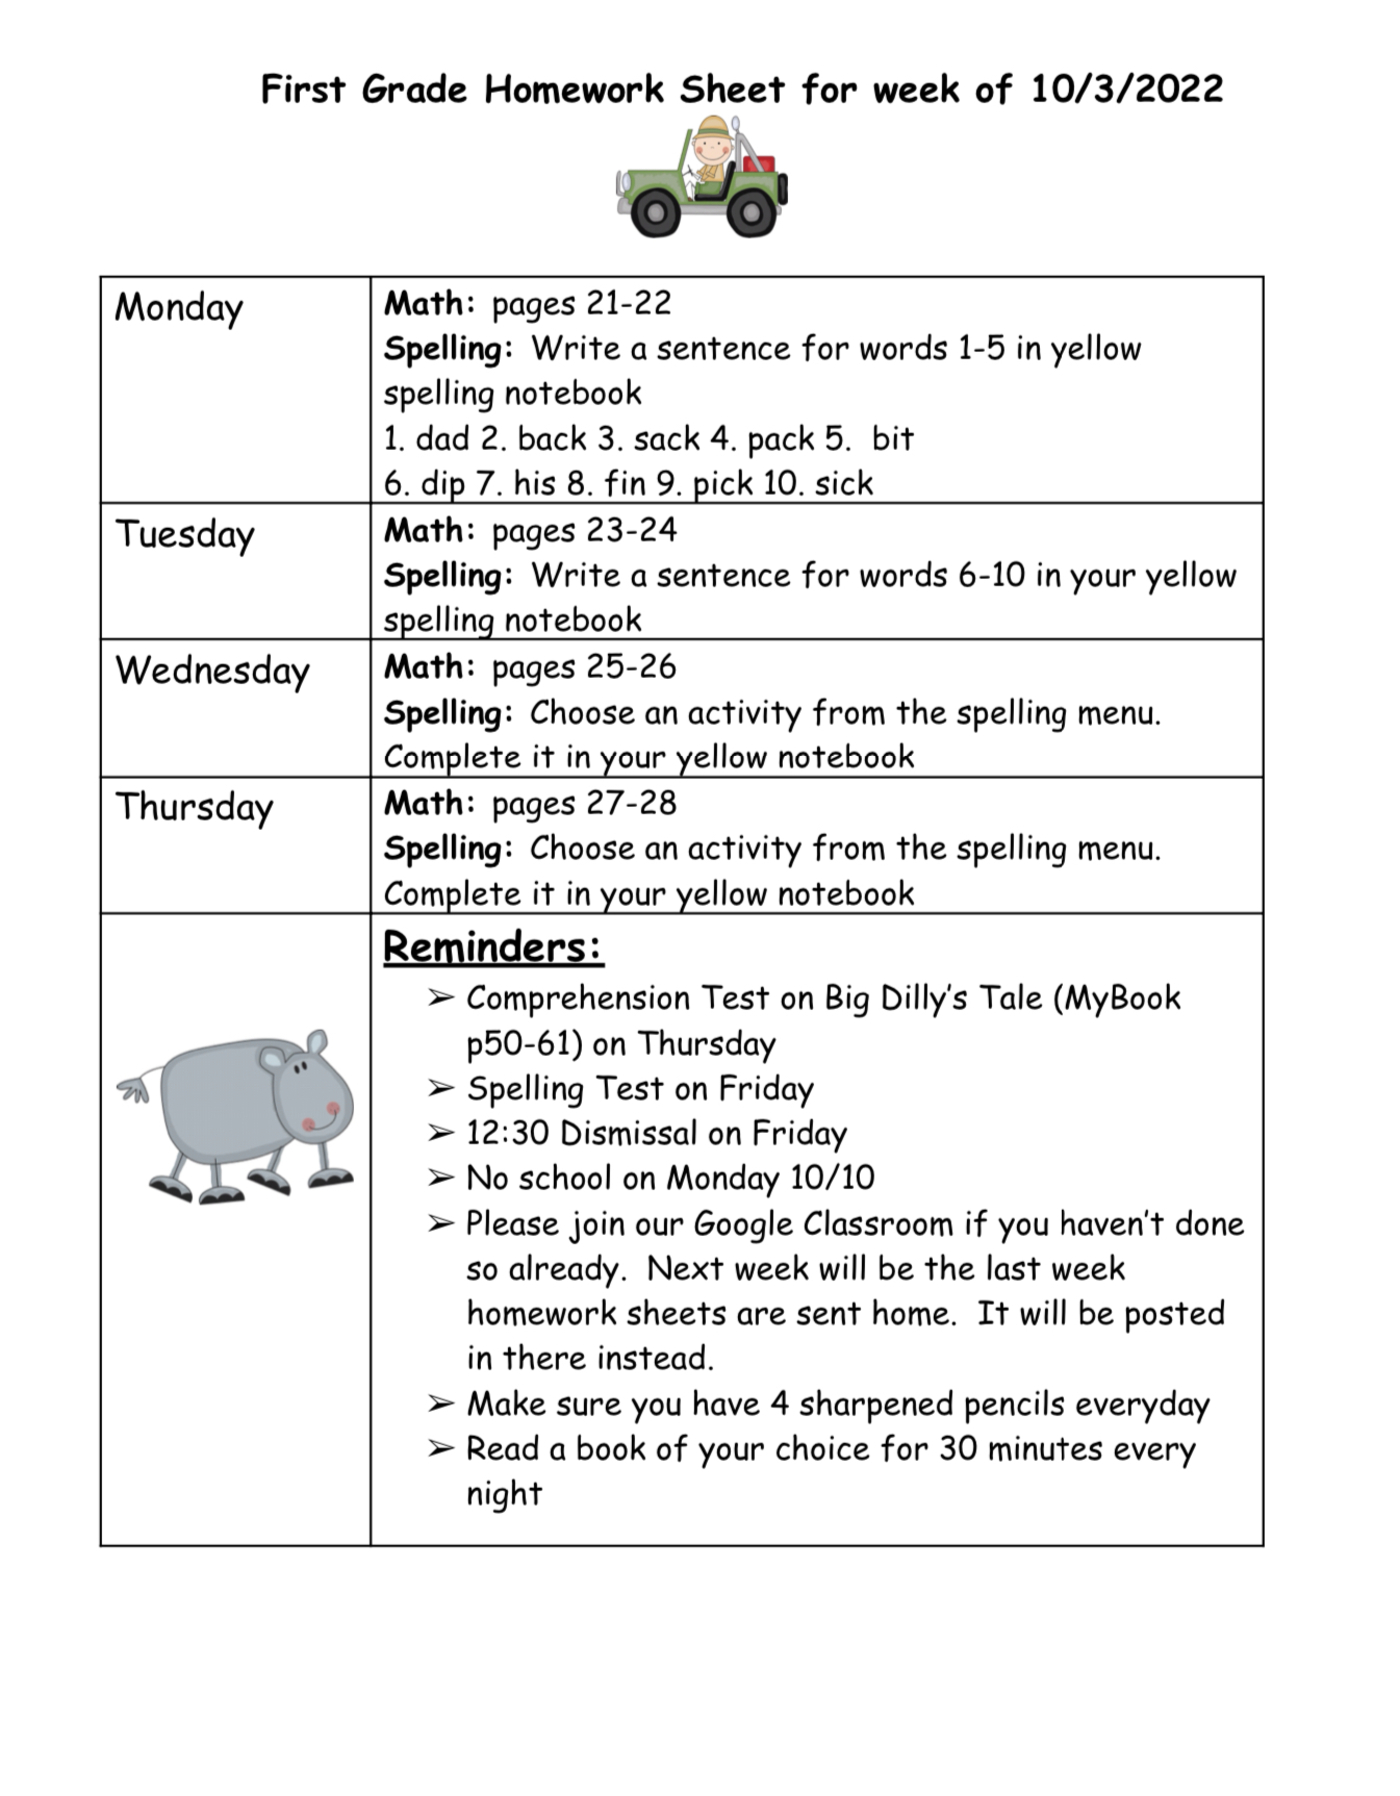 homework for the week of October 3 2022